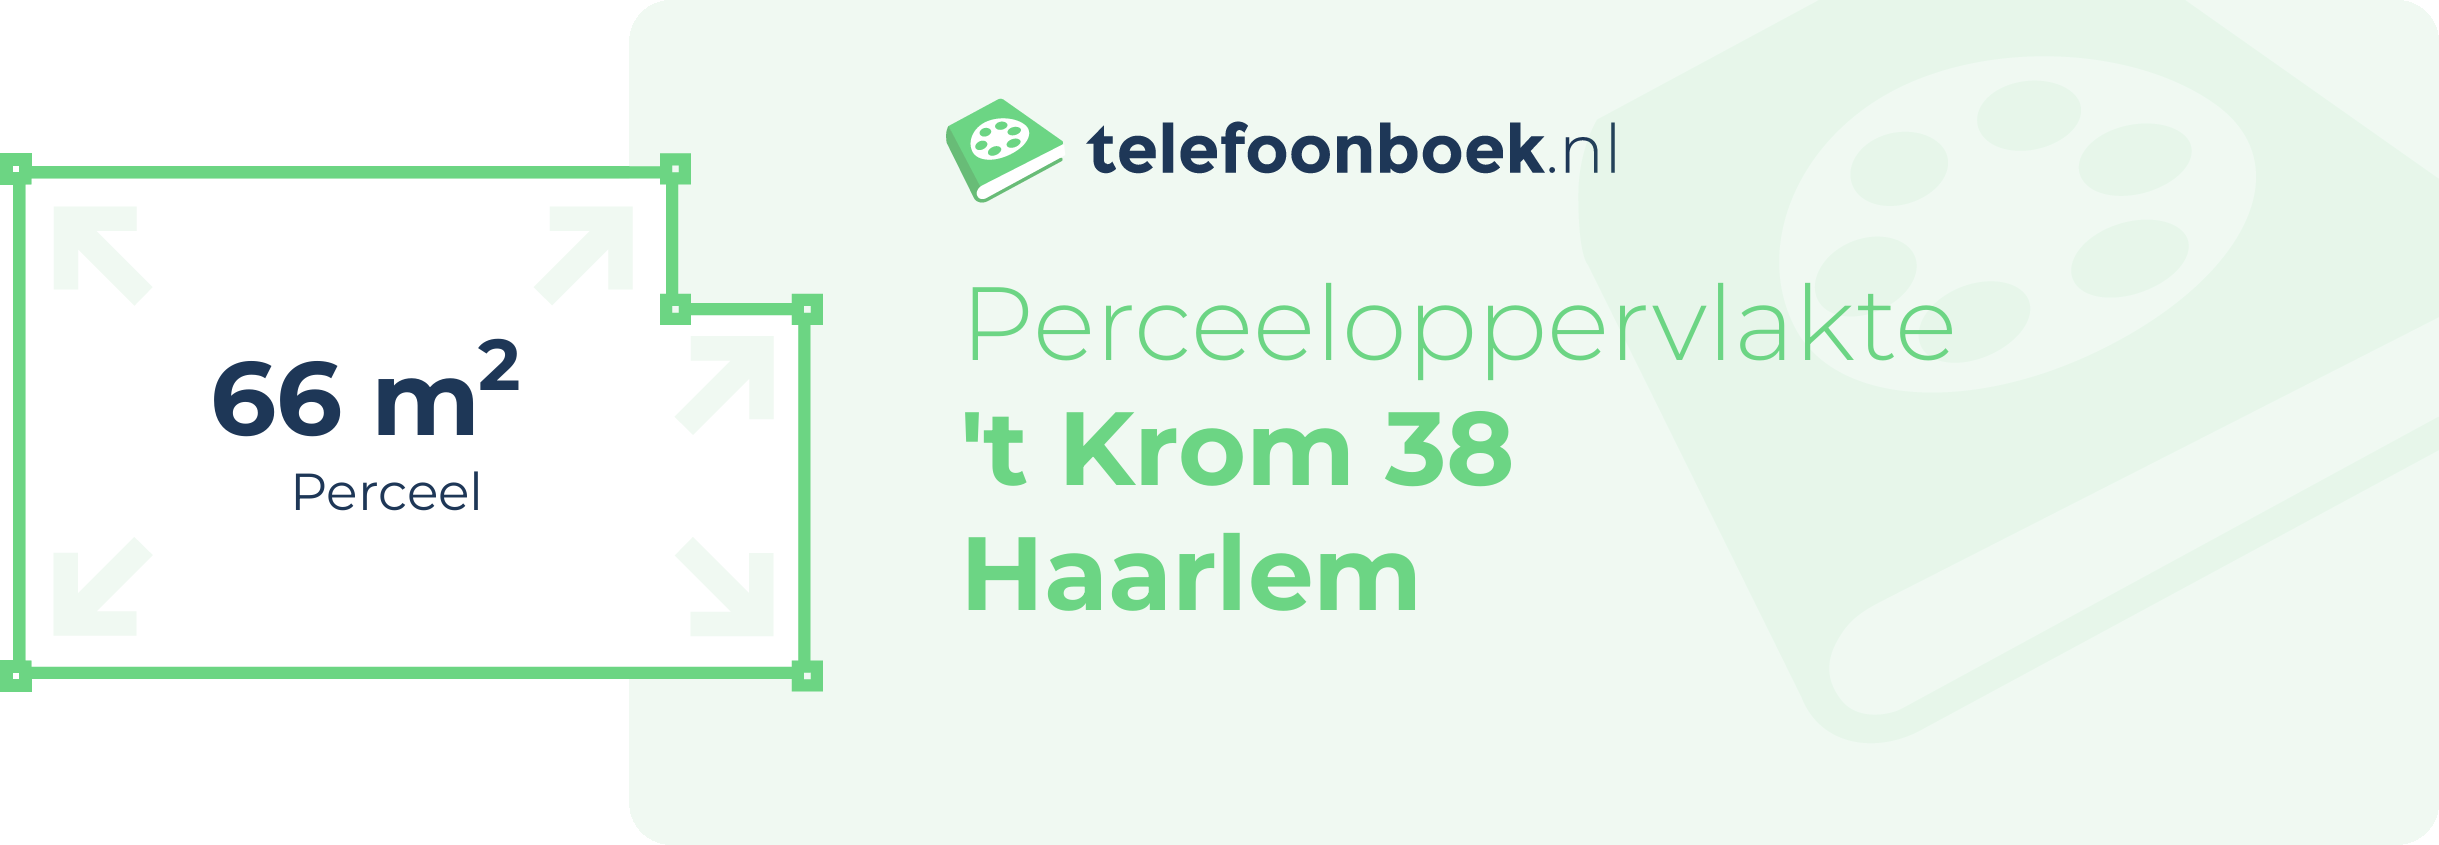 Perceeloppervlakte 't Krom 38 Haarlem